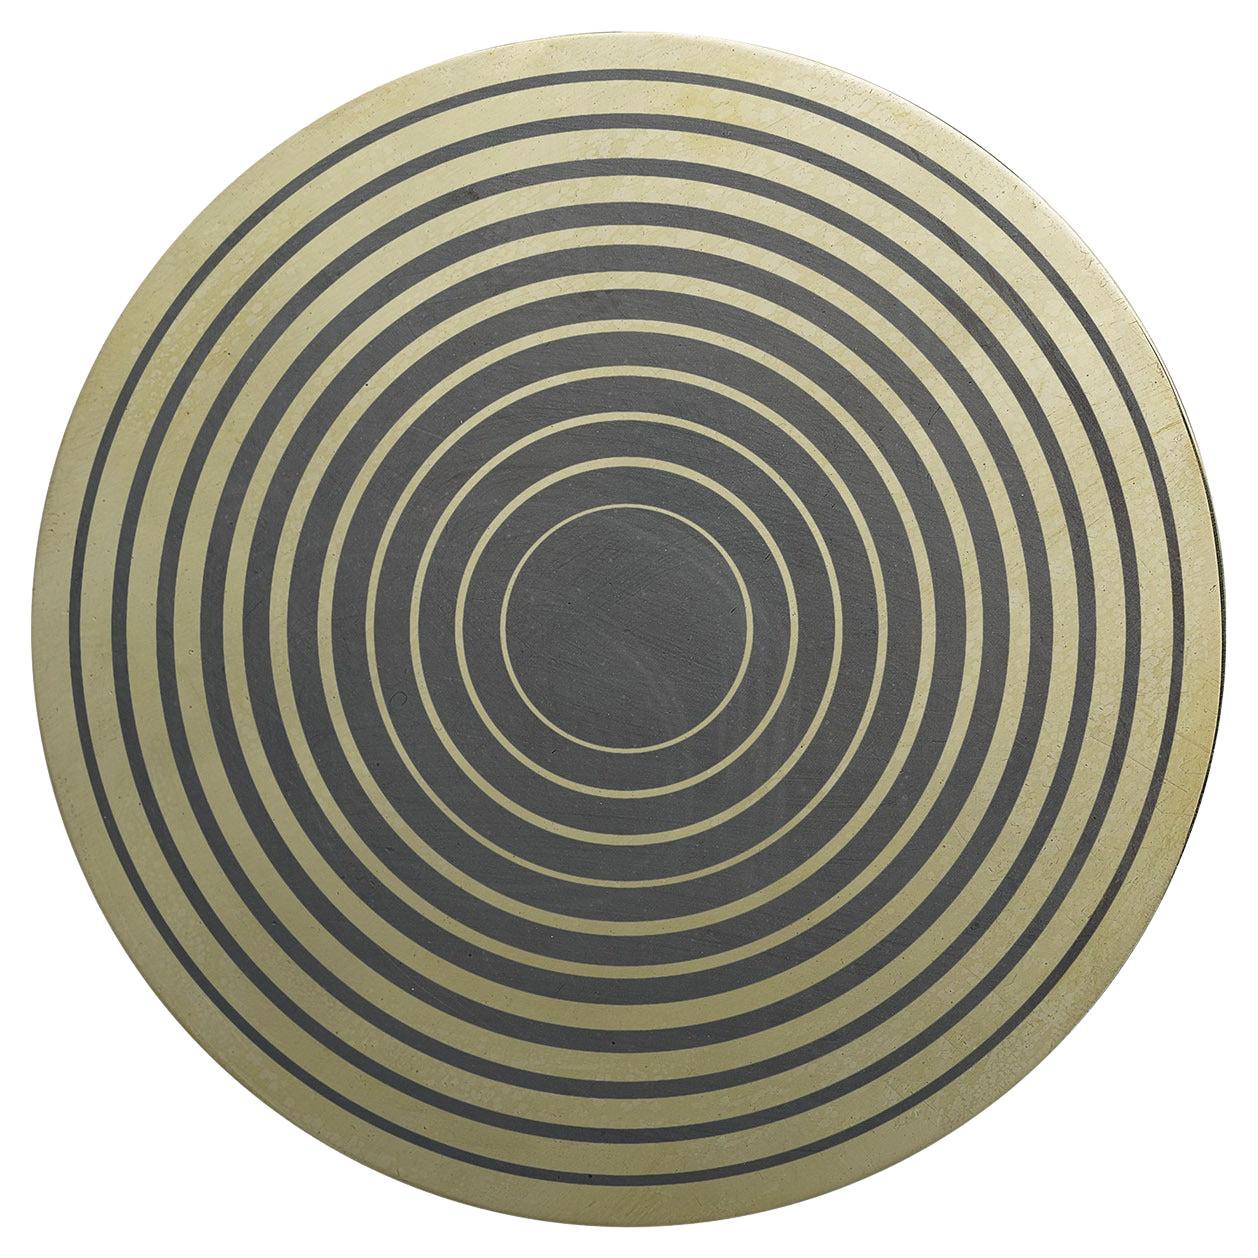 Aniconico Decorative Disk #7